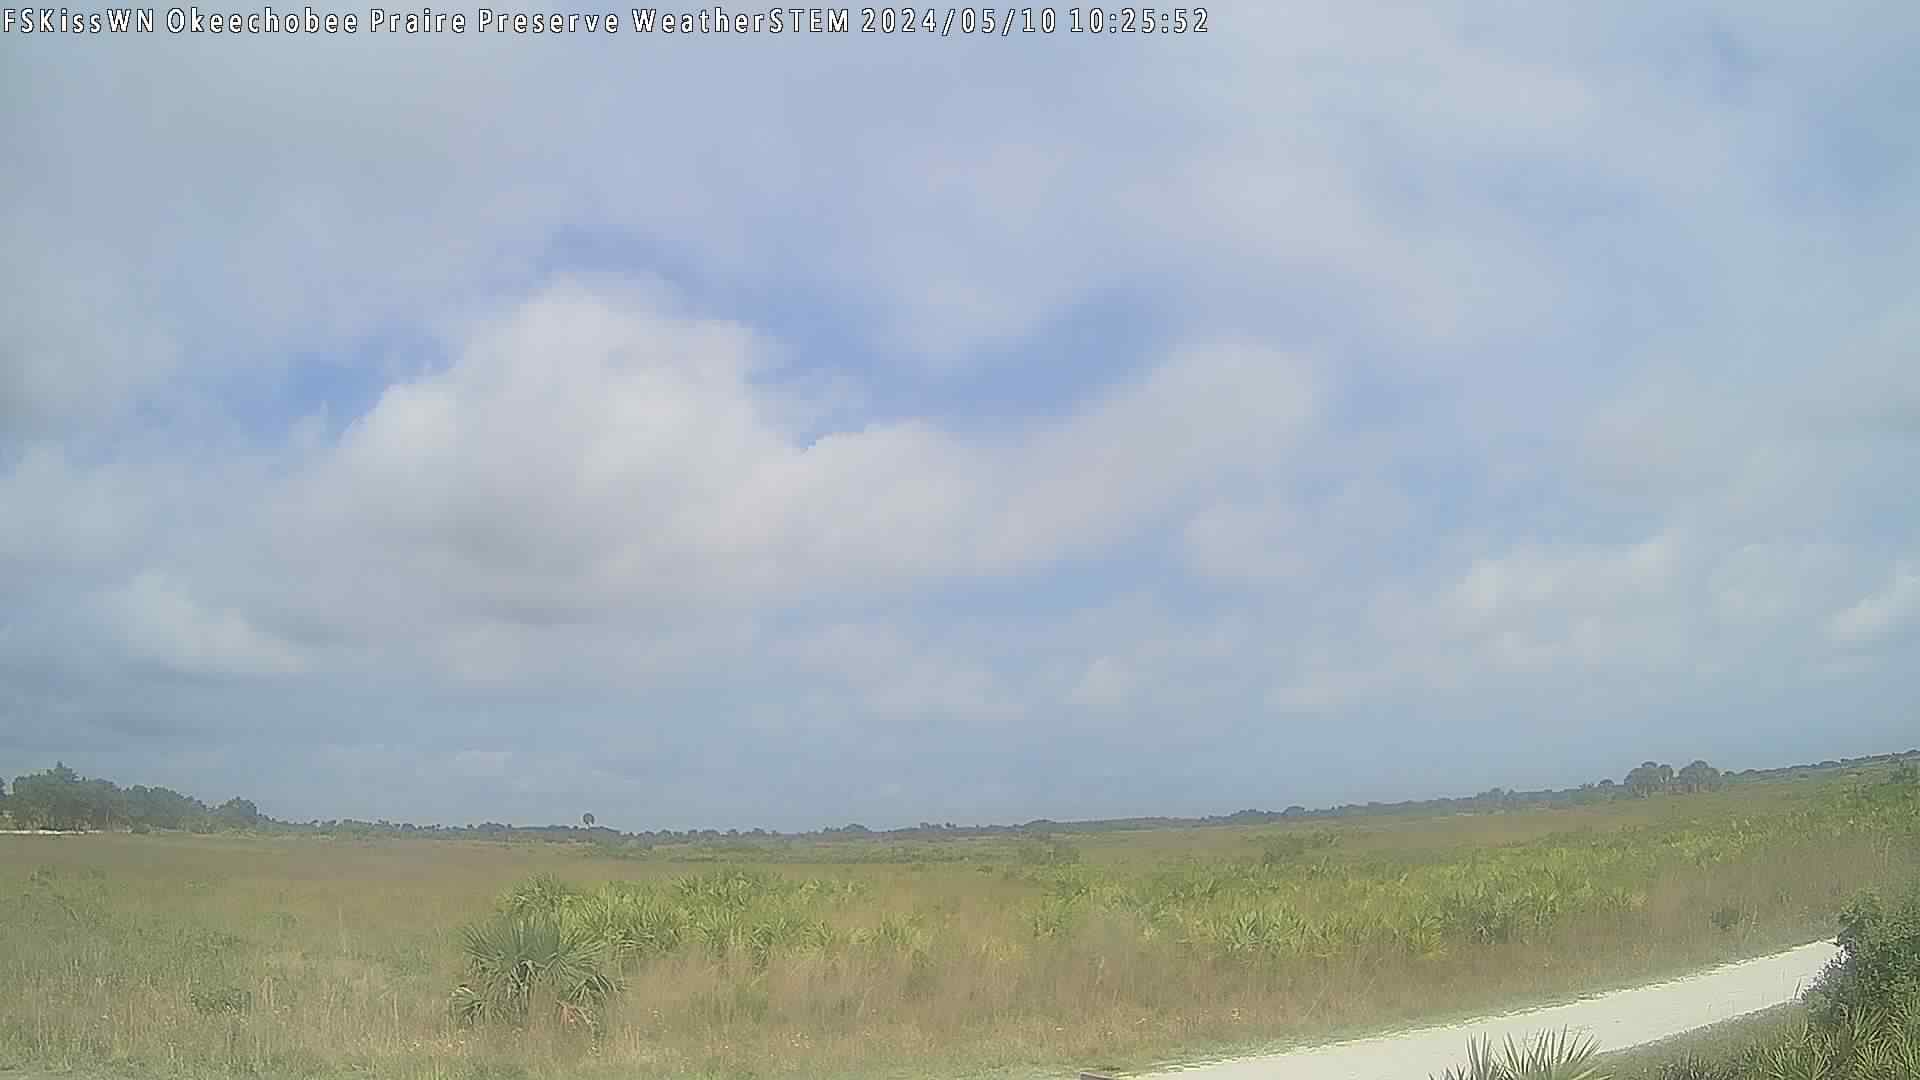  WeatherSTEM Northwest Camera FSWNKPPSP in Okeechobee County, Florida FL at 